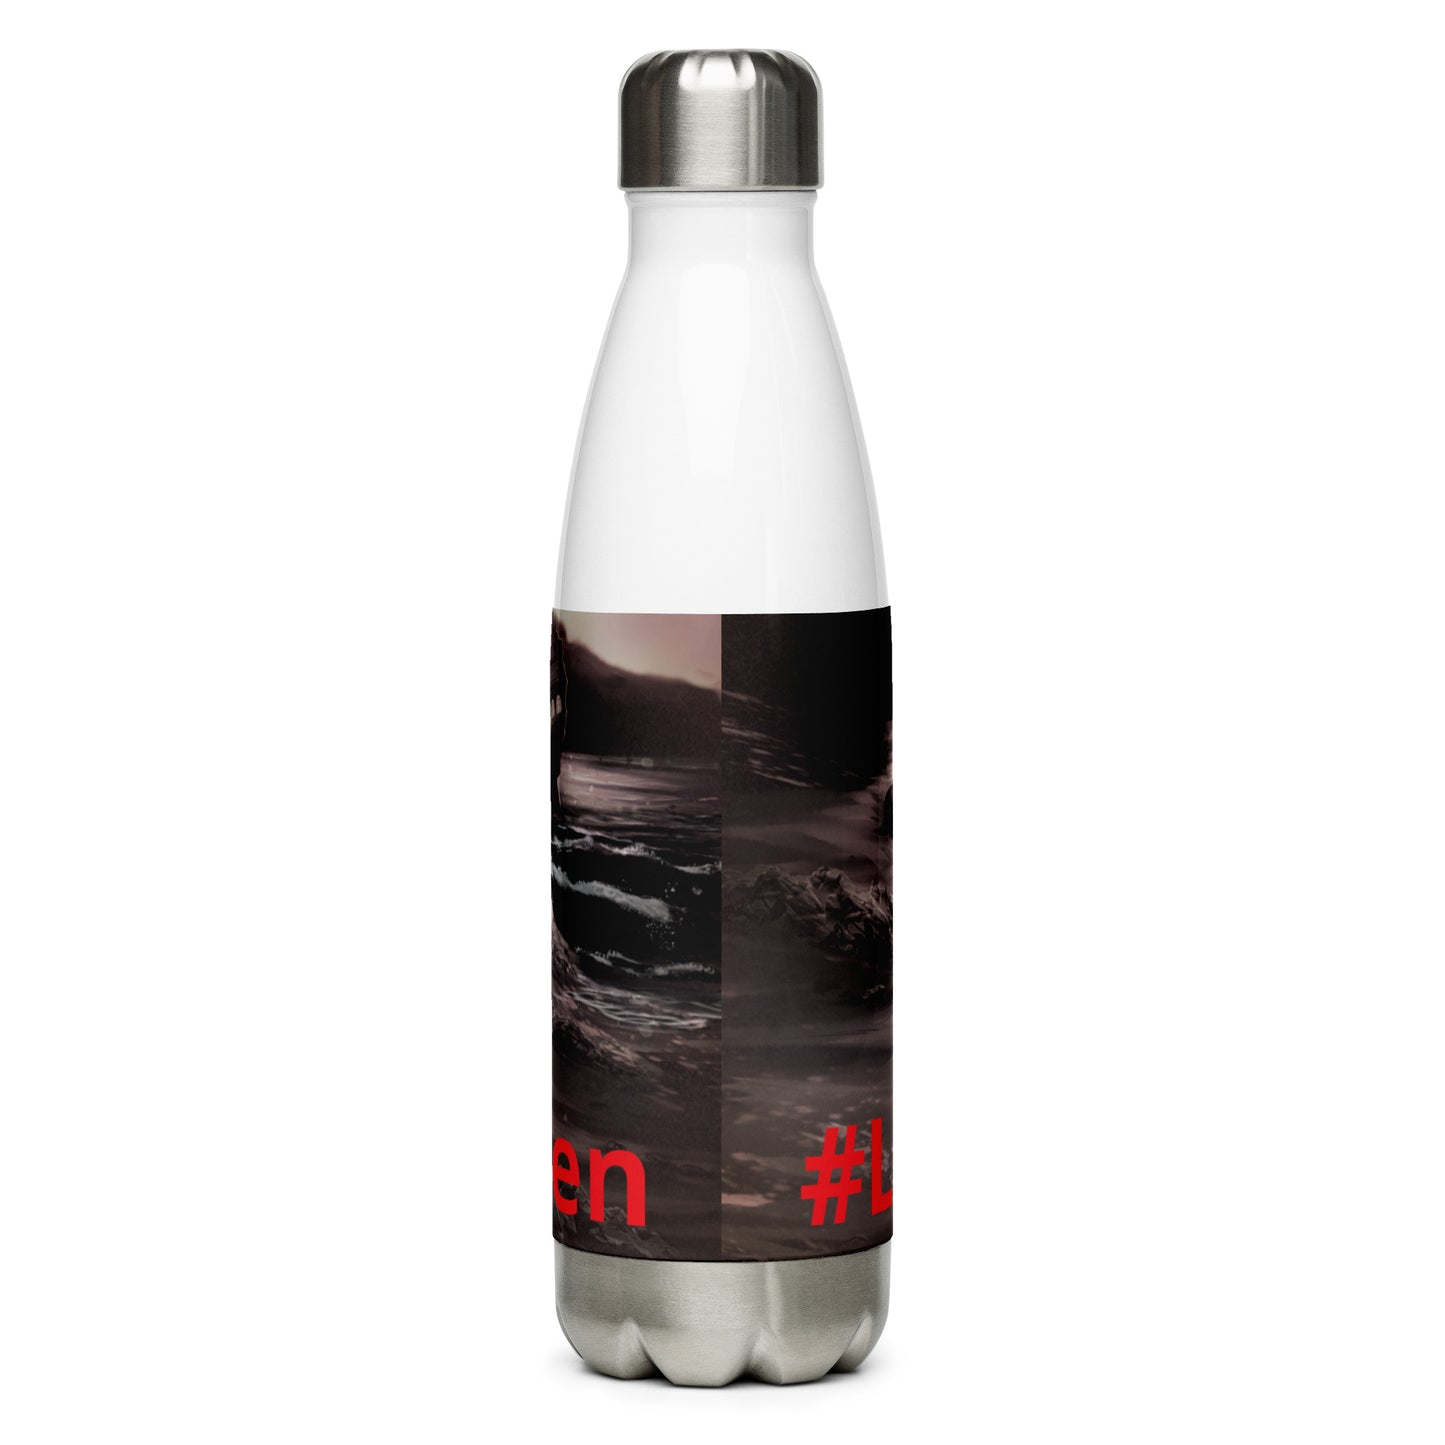 #LikeAQueen Shipwreck Stainless Steel Water Bottle